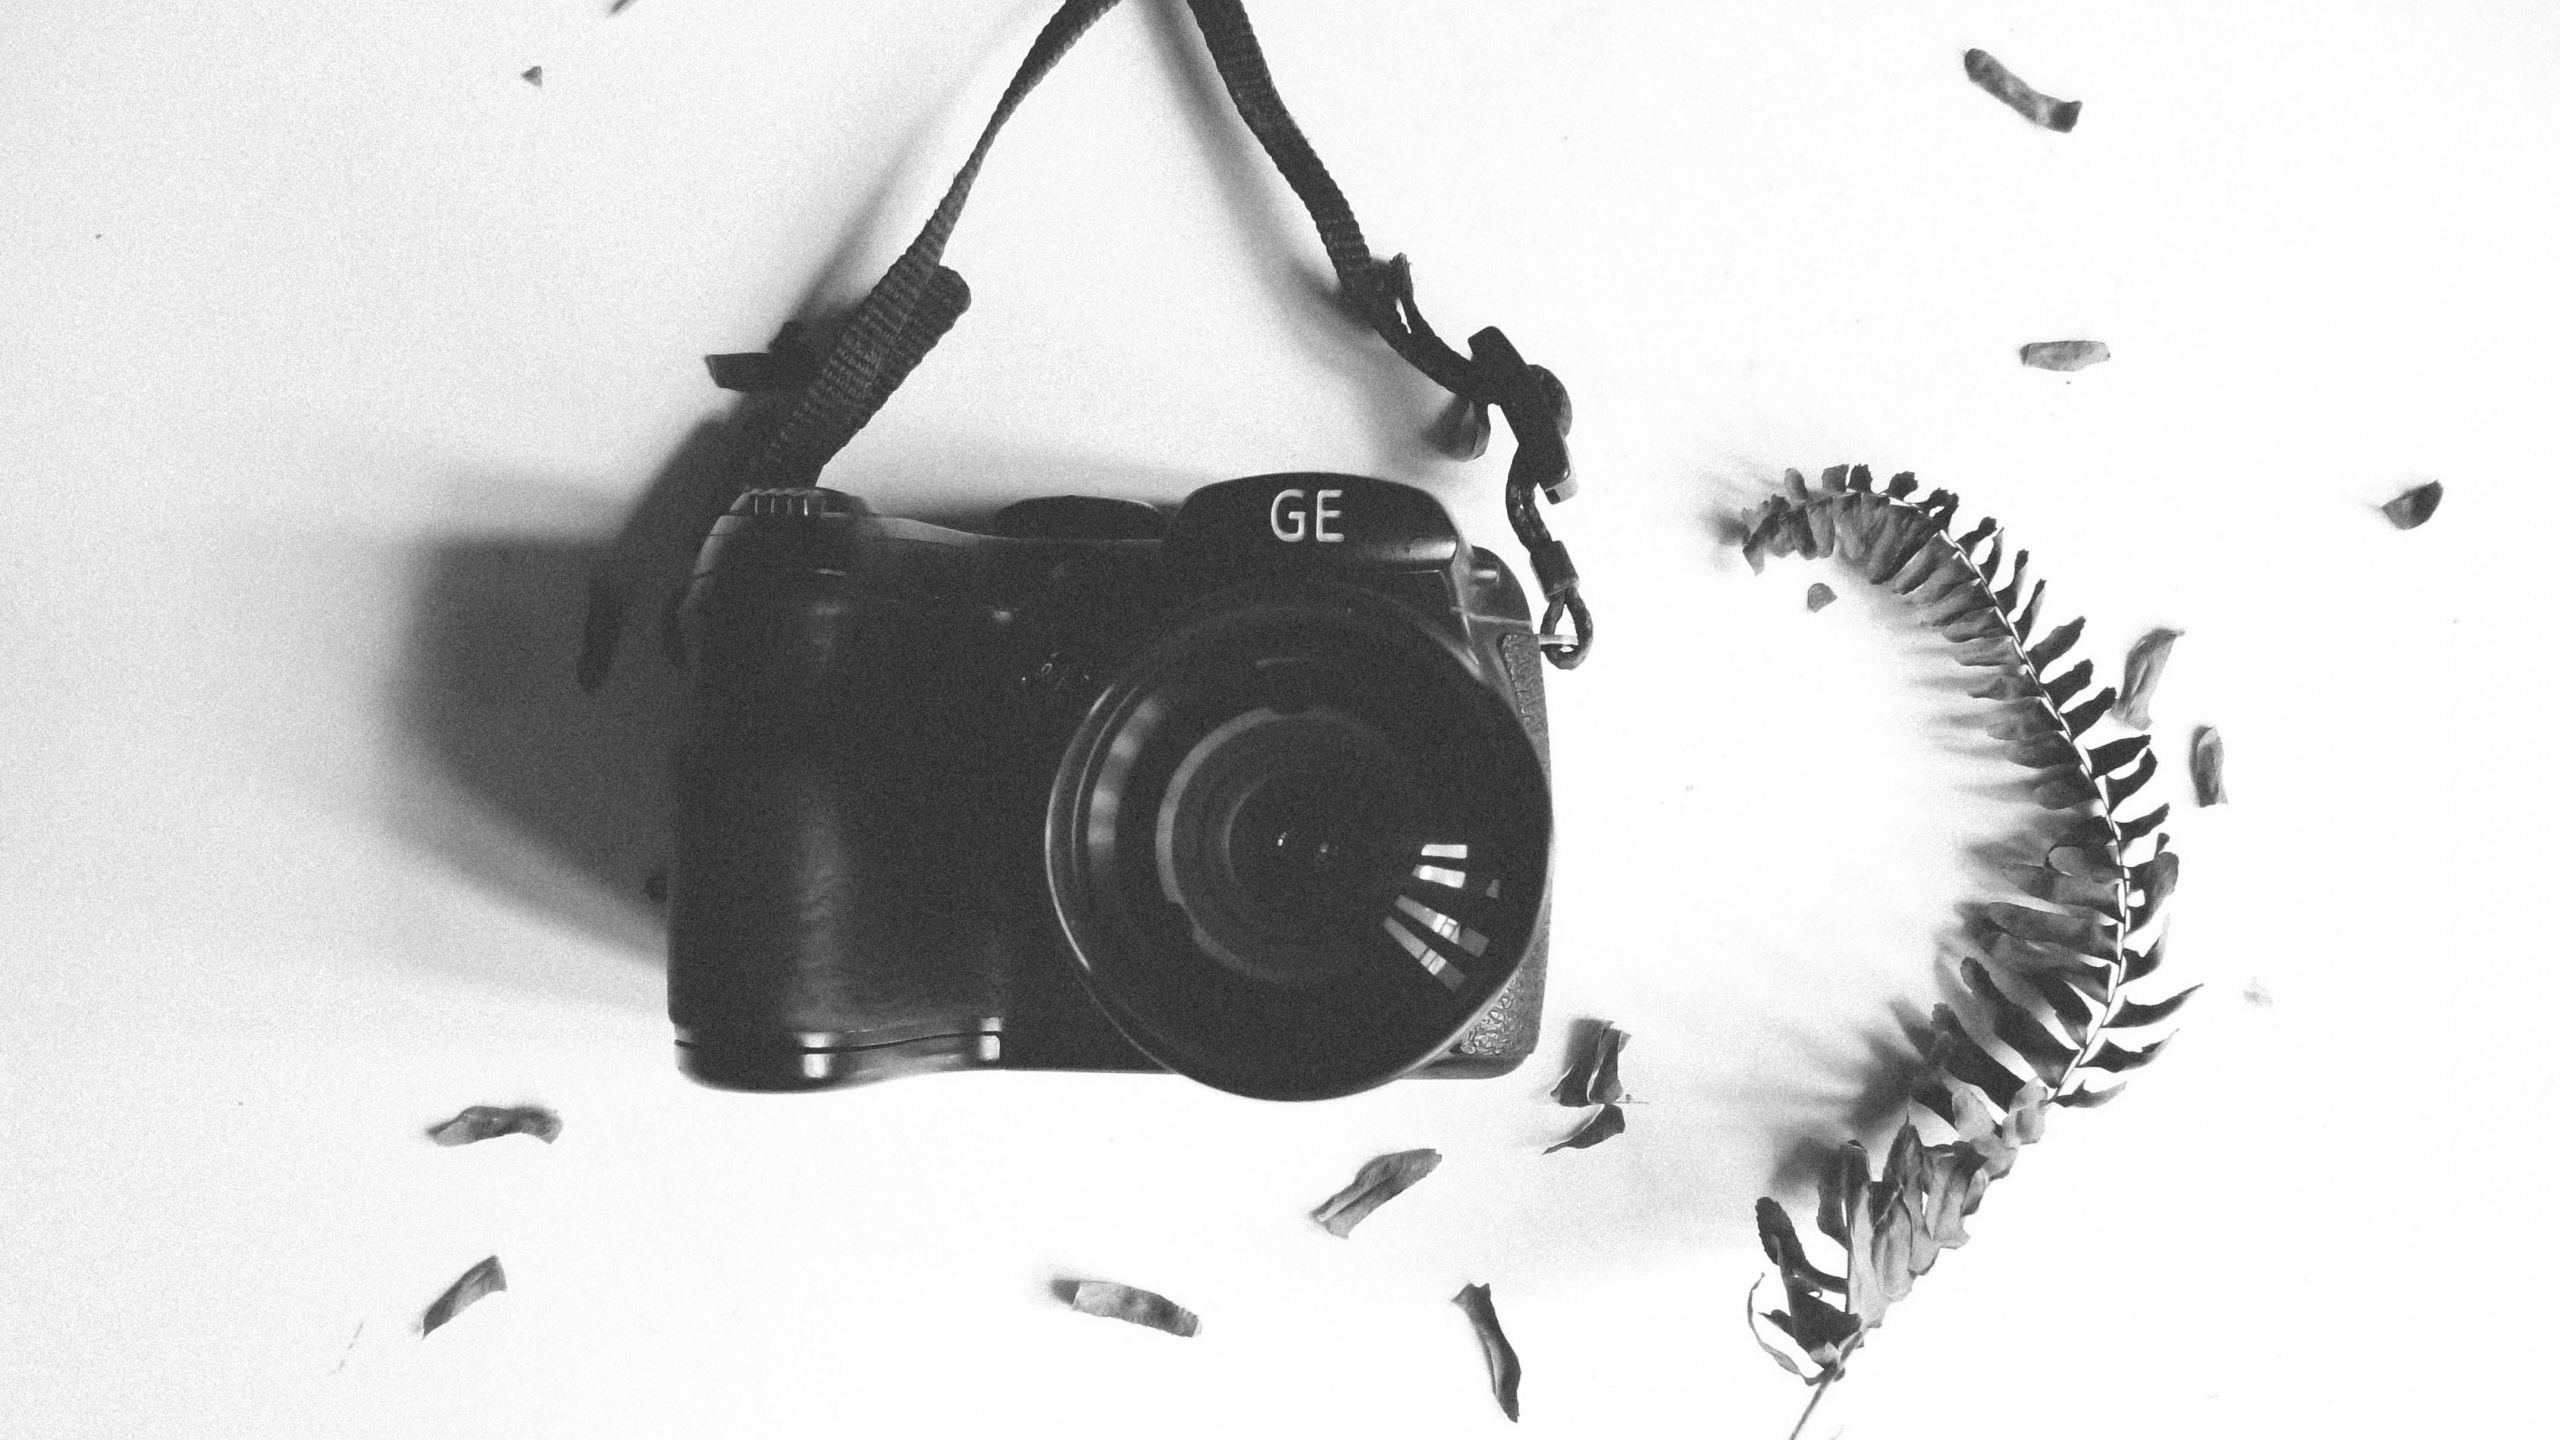 Black Nikon Dslr Camera on White Textile. Wallpaper in 2560x1440 Resolution